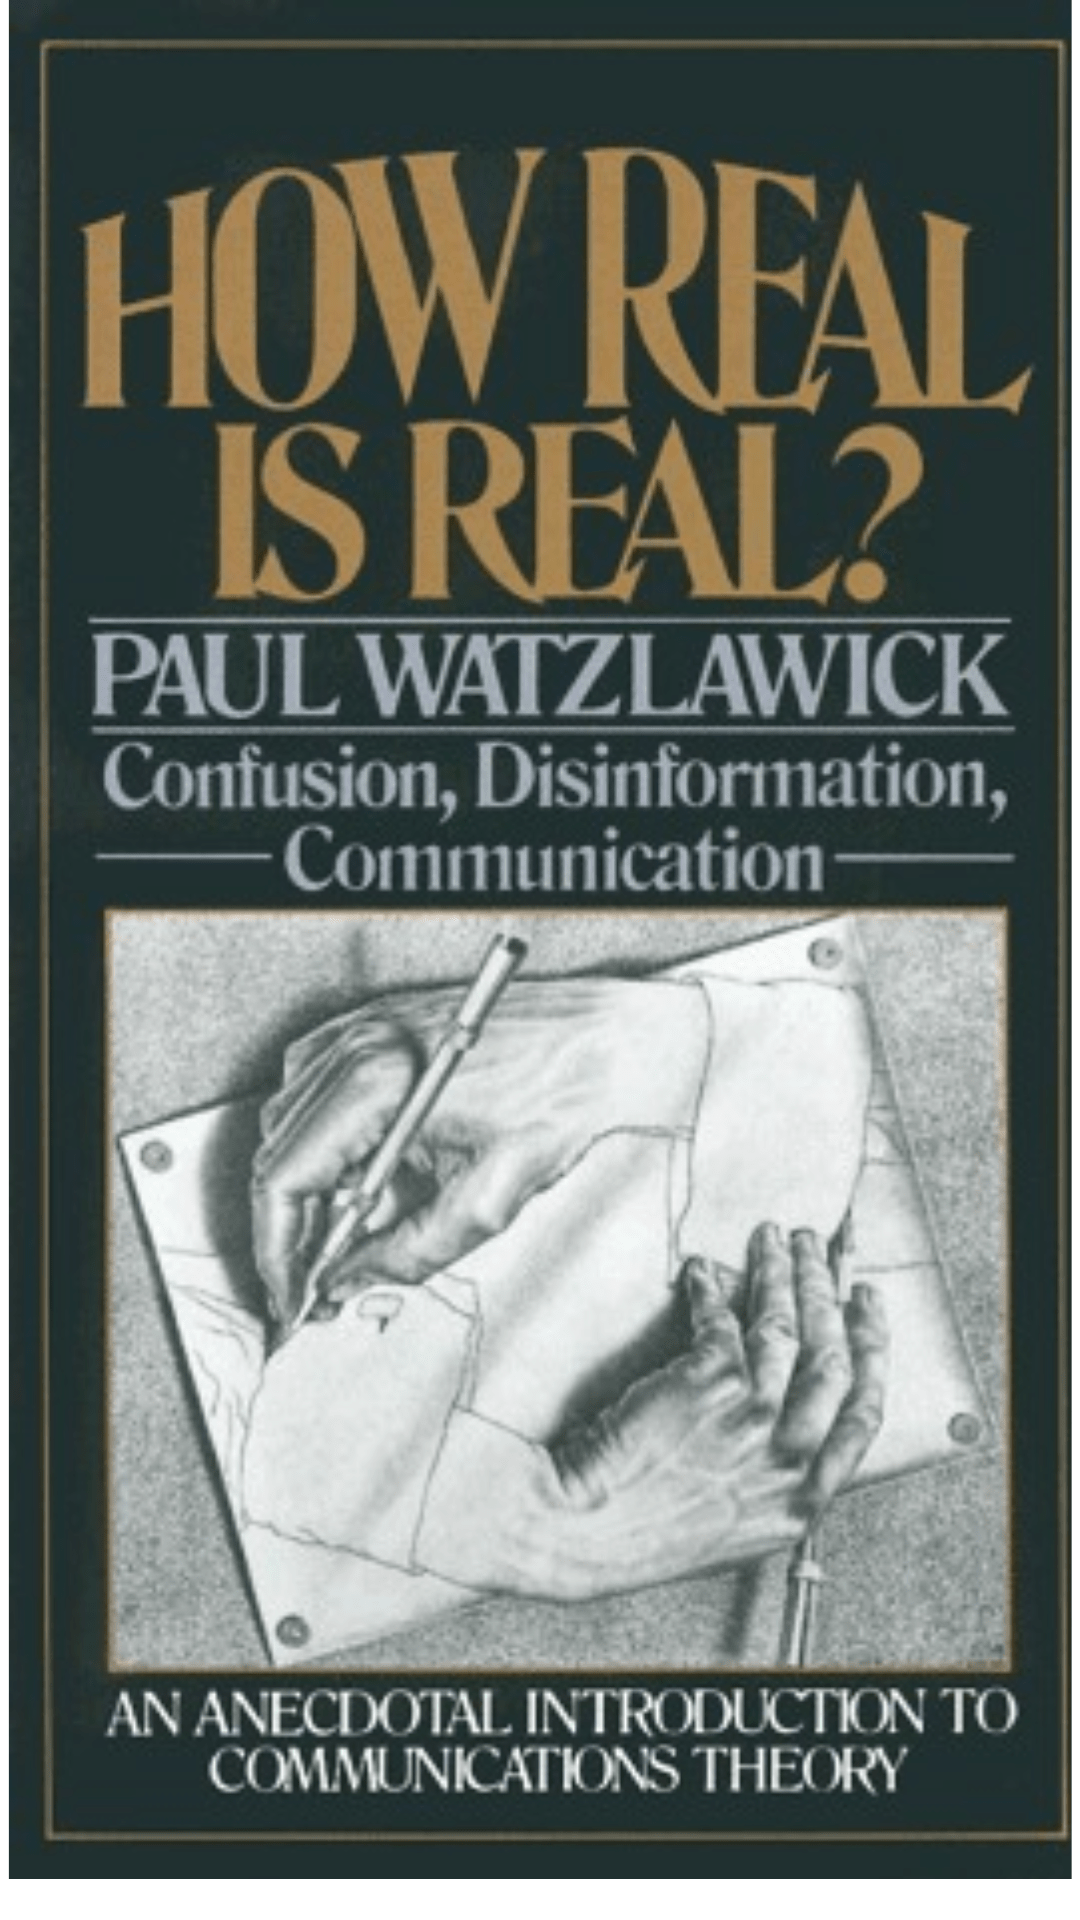 How Real Is Real? by Paul Watzlawick